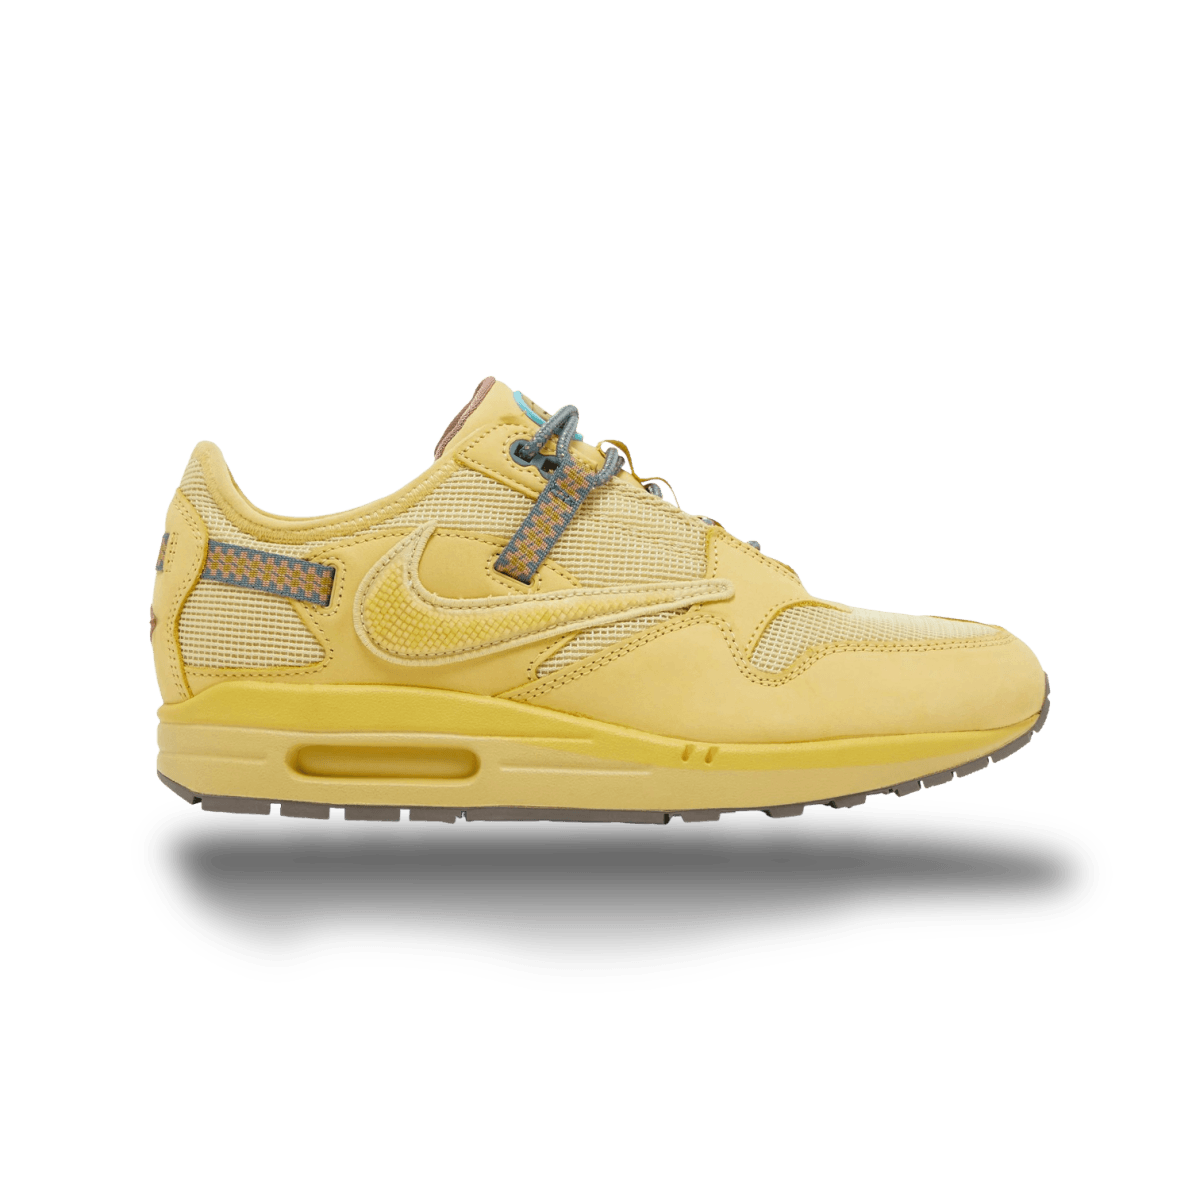 Travis Scott x Air Max 1 'Saturn Gold' - Low Sneaker - Jawns on Fire Sneakers & Streetwear